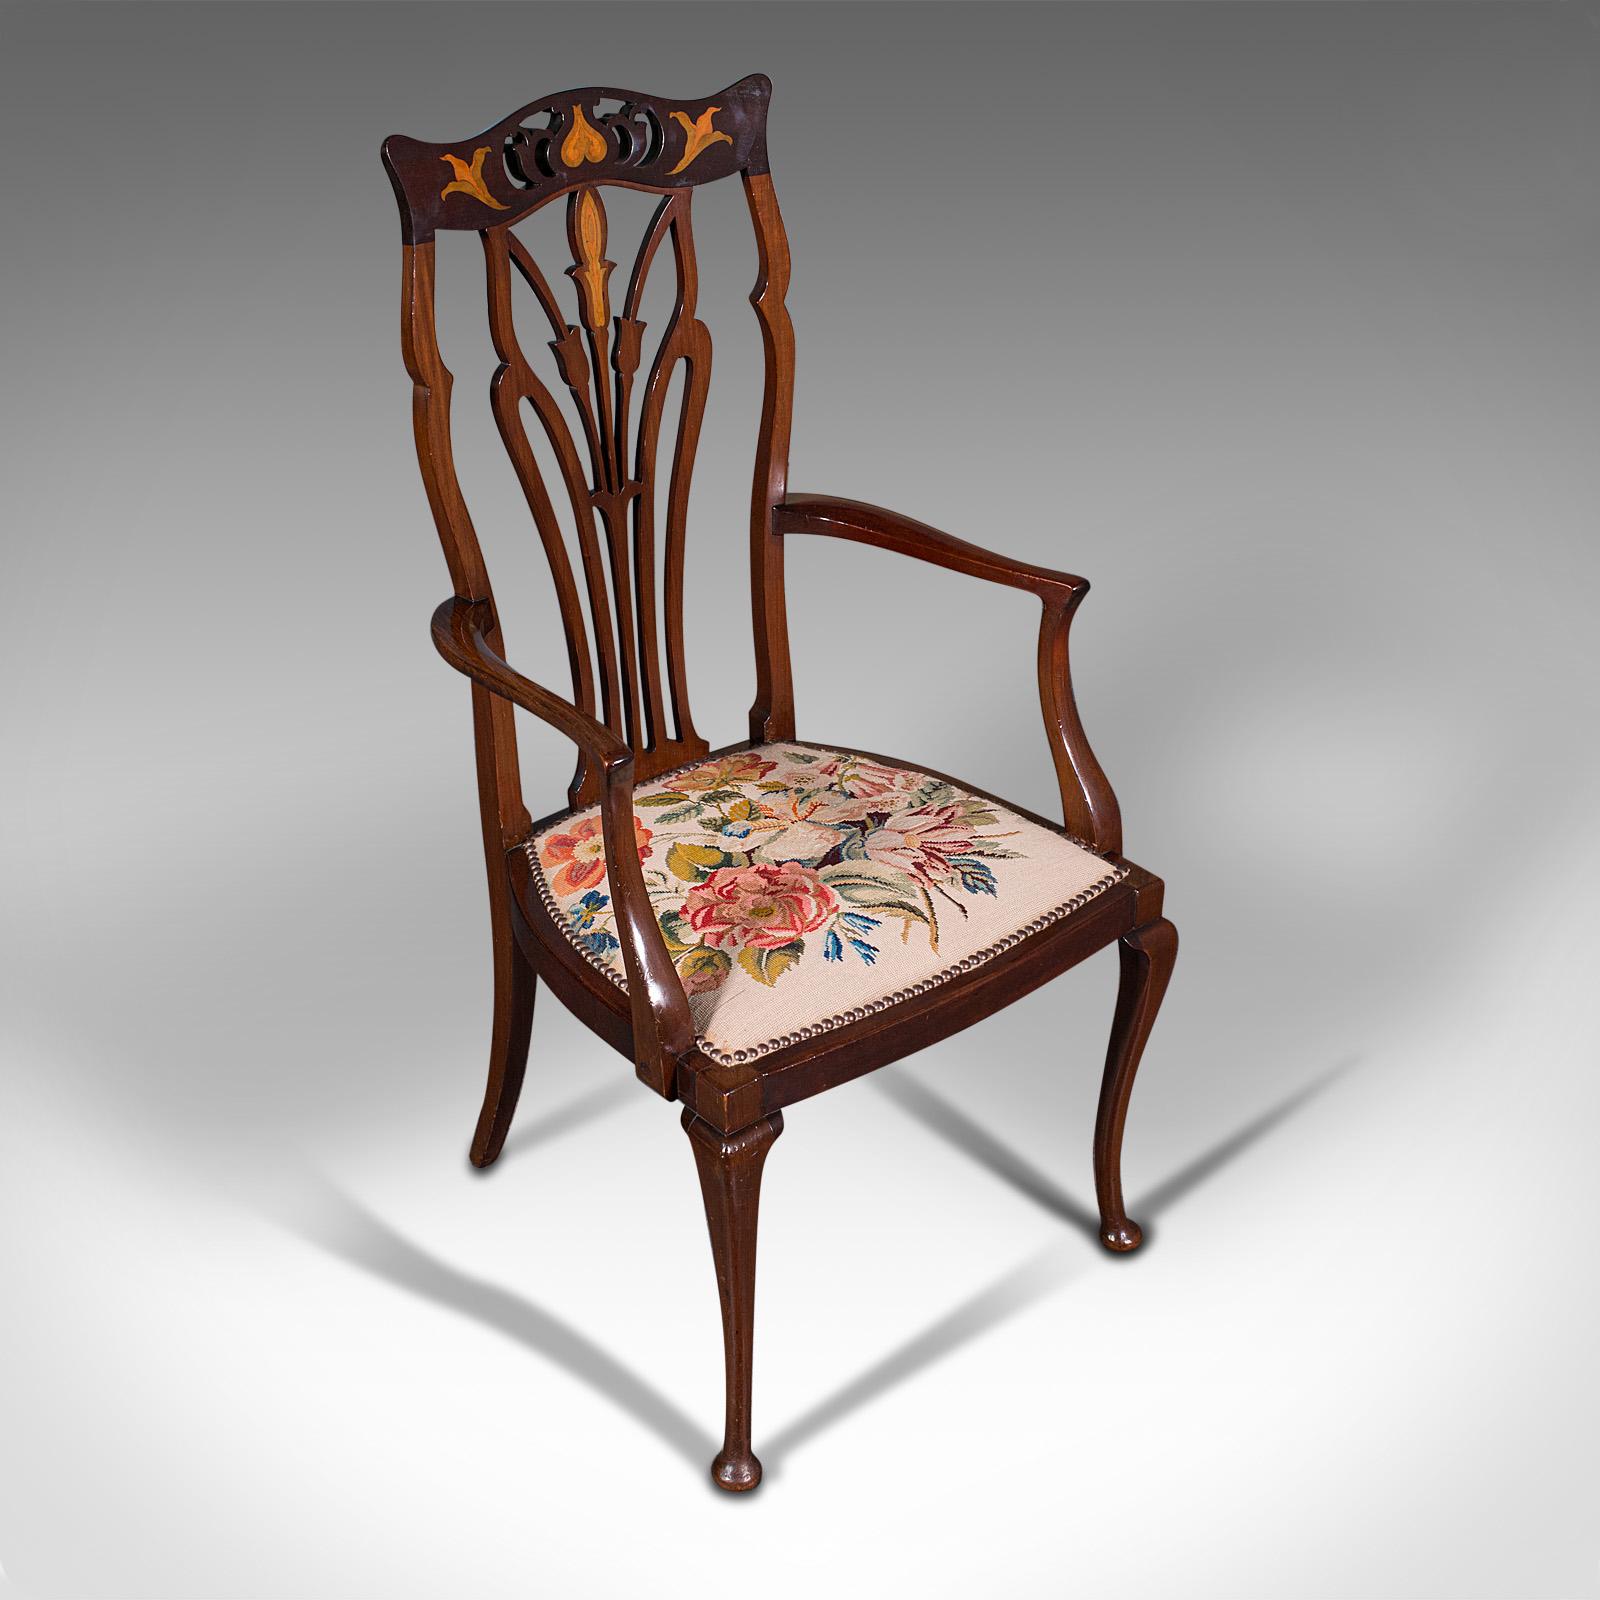 Wood Antique Elbow Chair, English, Occasional, Art Nouveau, Libertyesque, Victorian